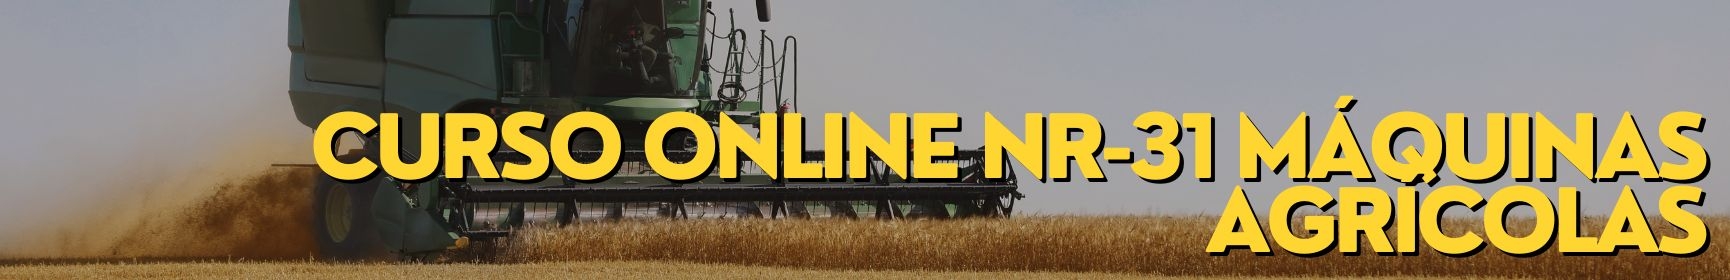 Curso Online NR-31 Máquinas Agrícolas Curso a Distancia para Empresas Curso Online de Operador de Maquina